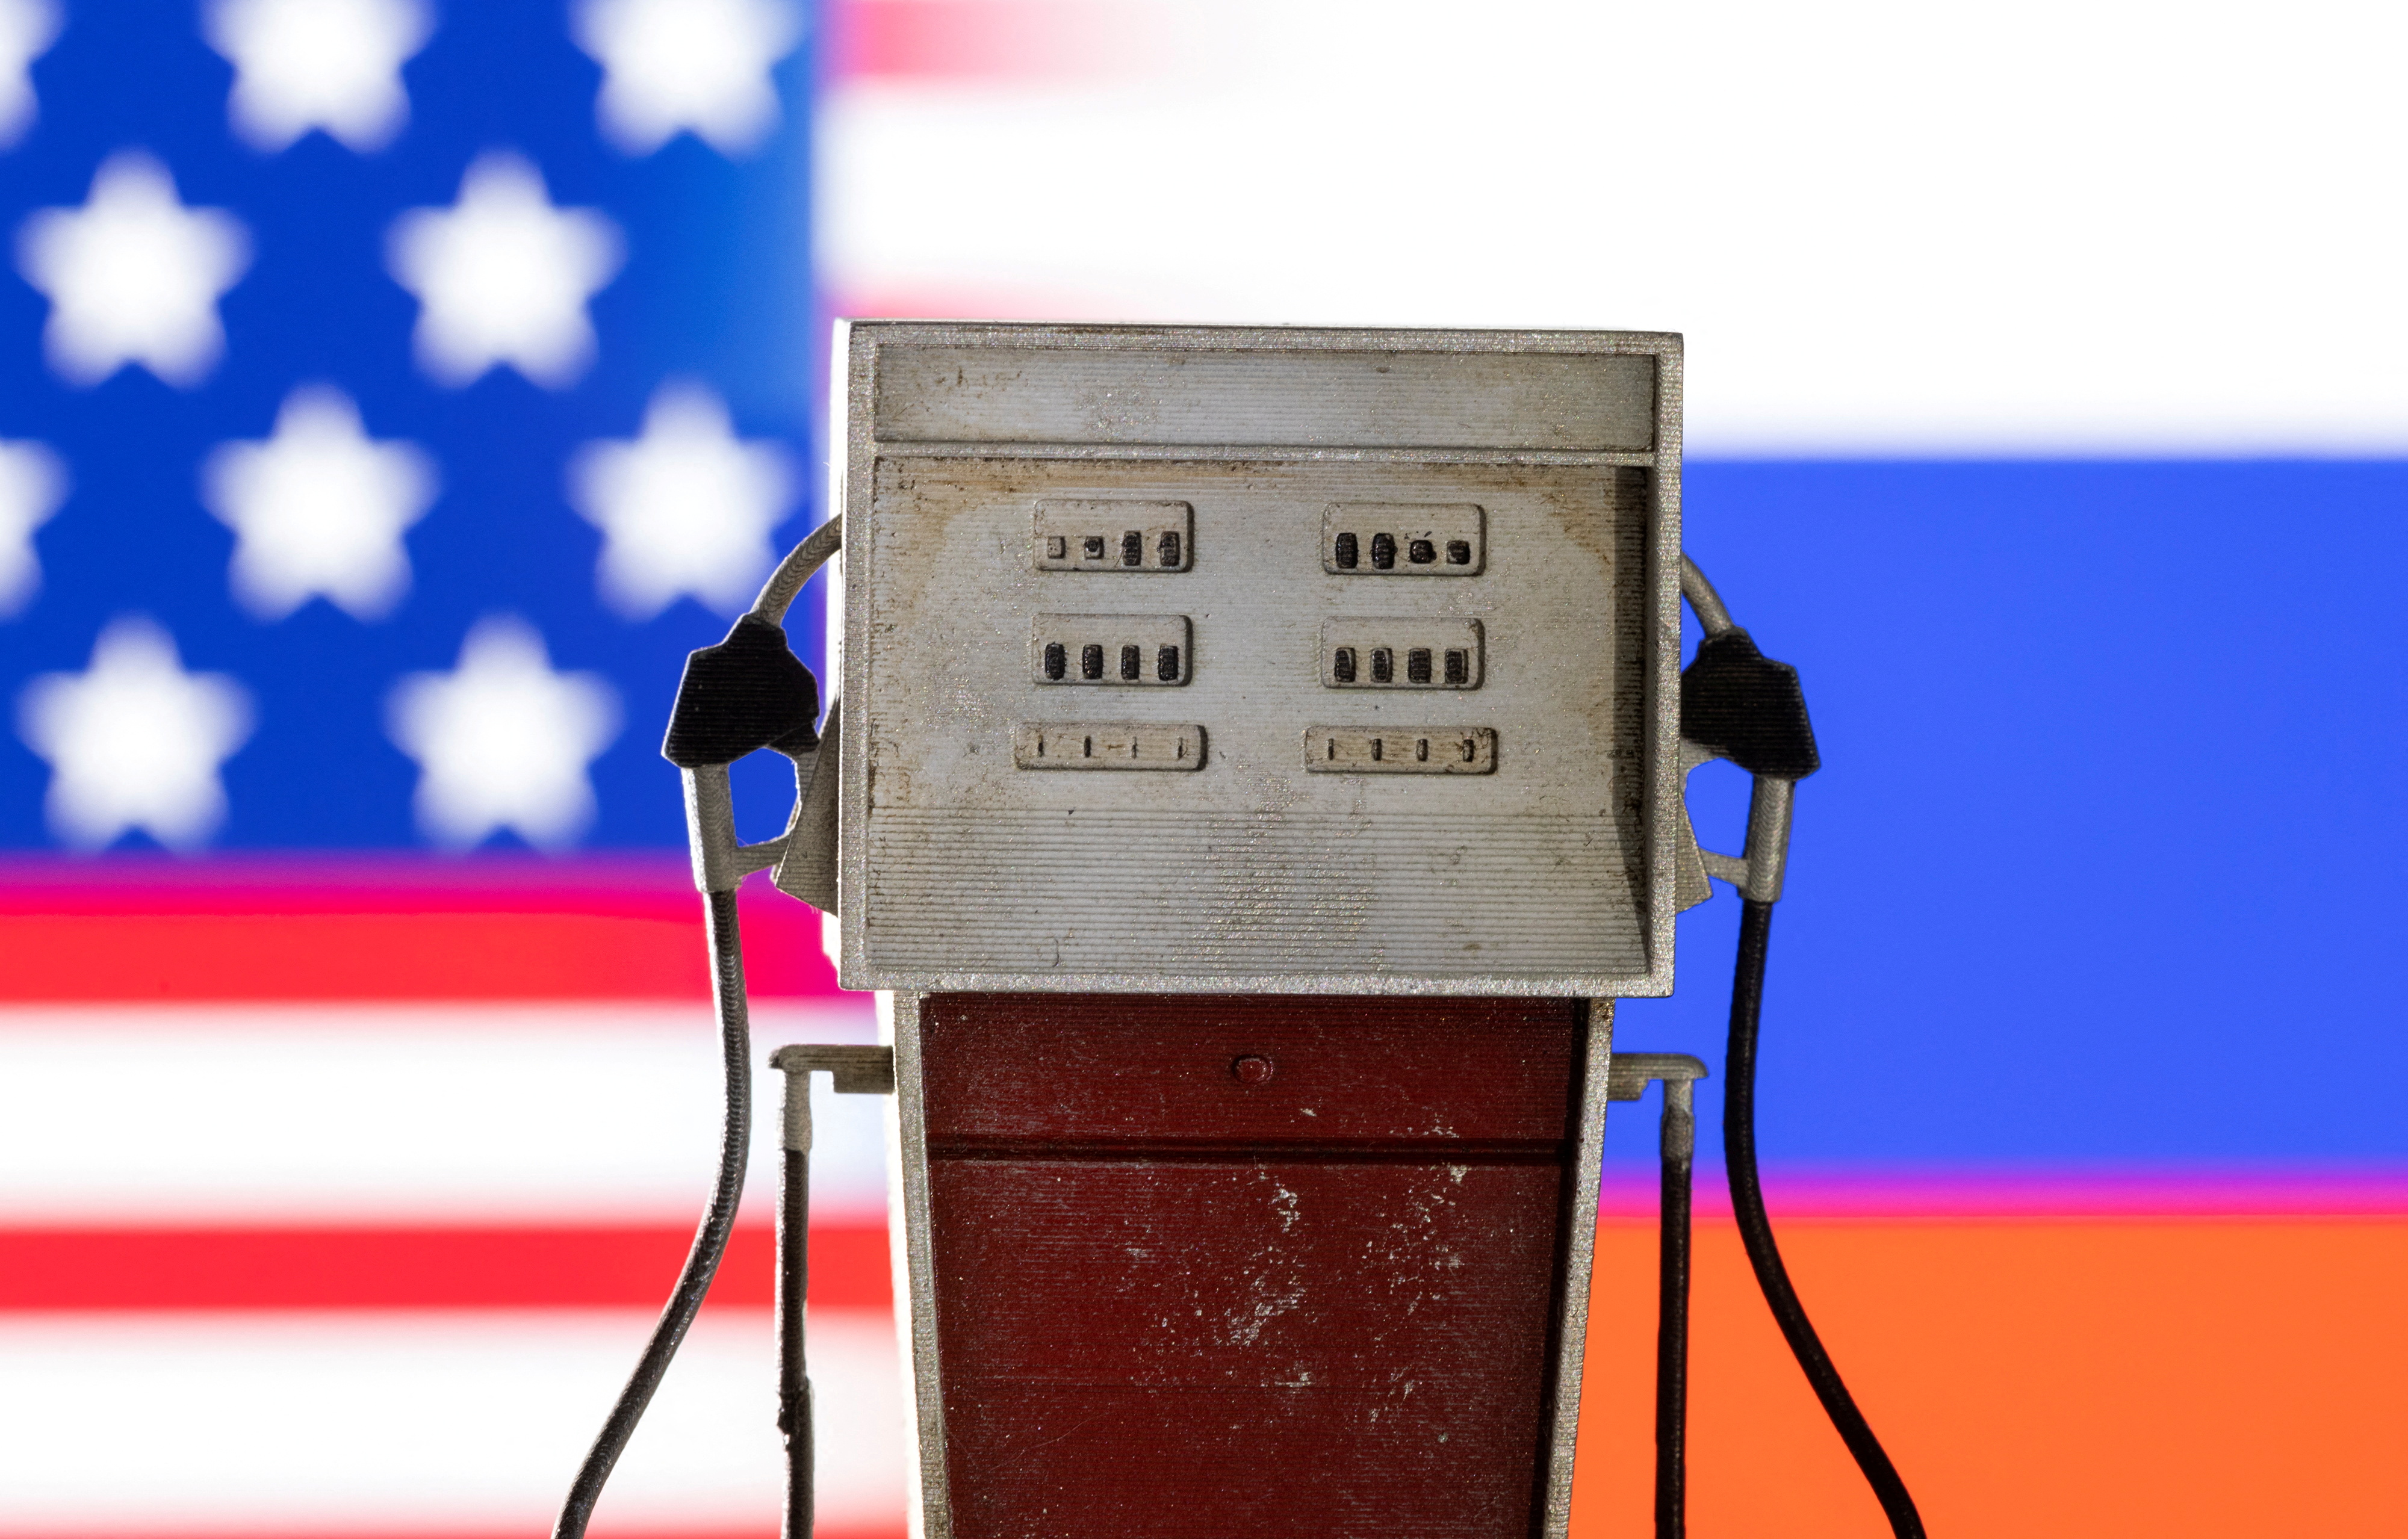 Illustration shows model of petrol pump, U.S. and Russian flag colors